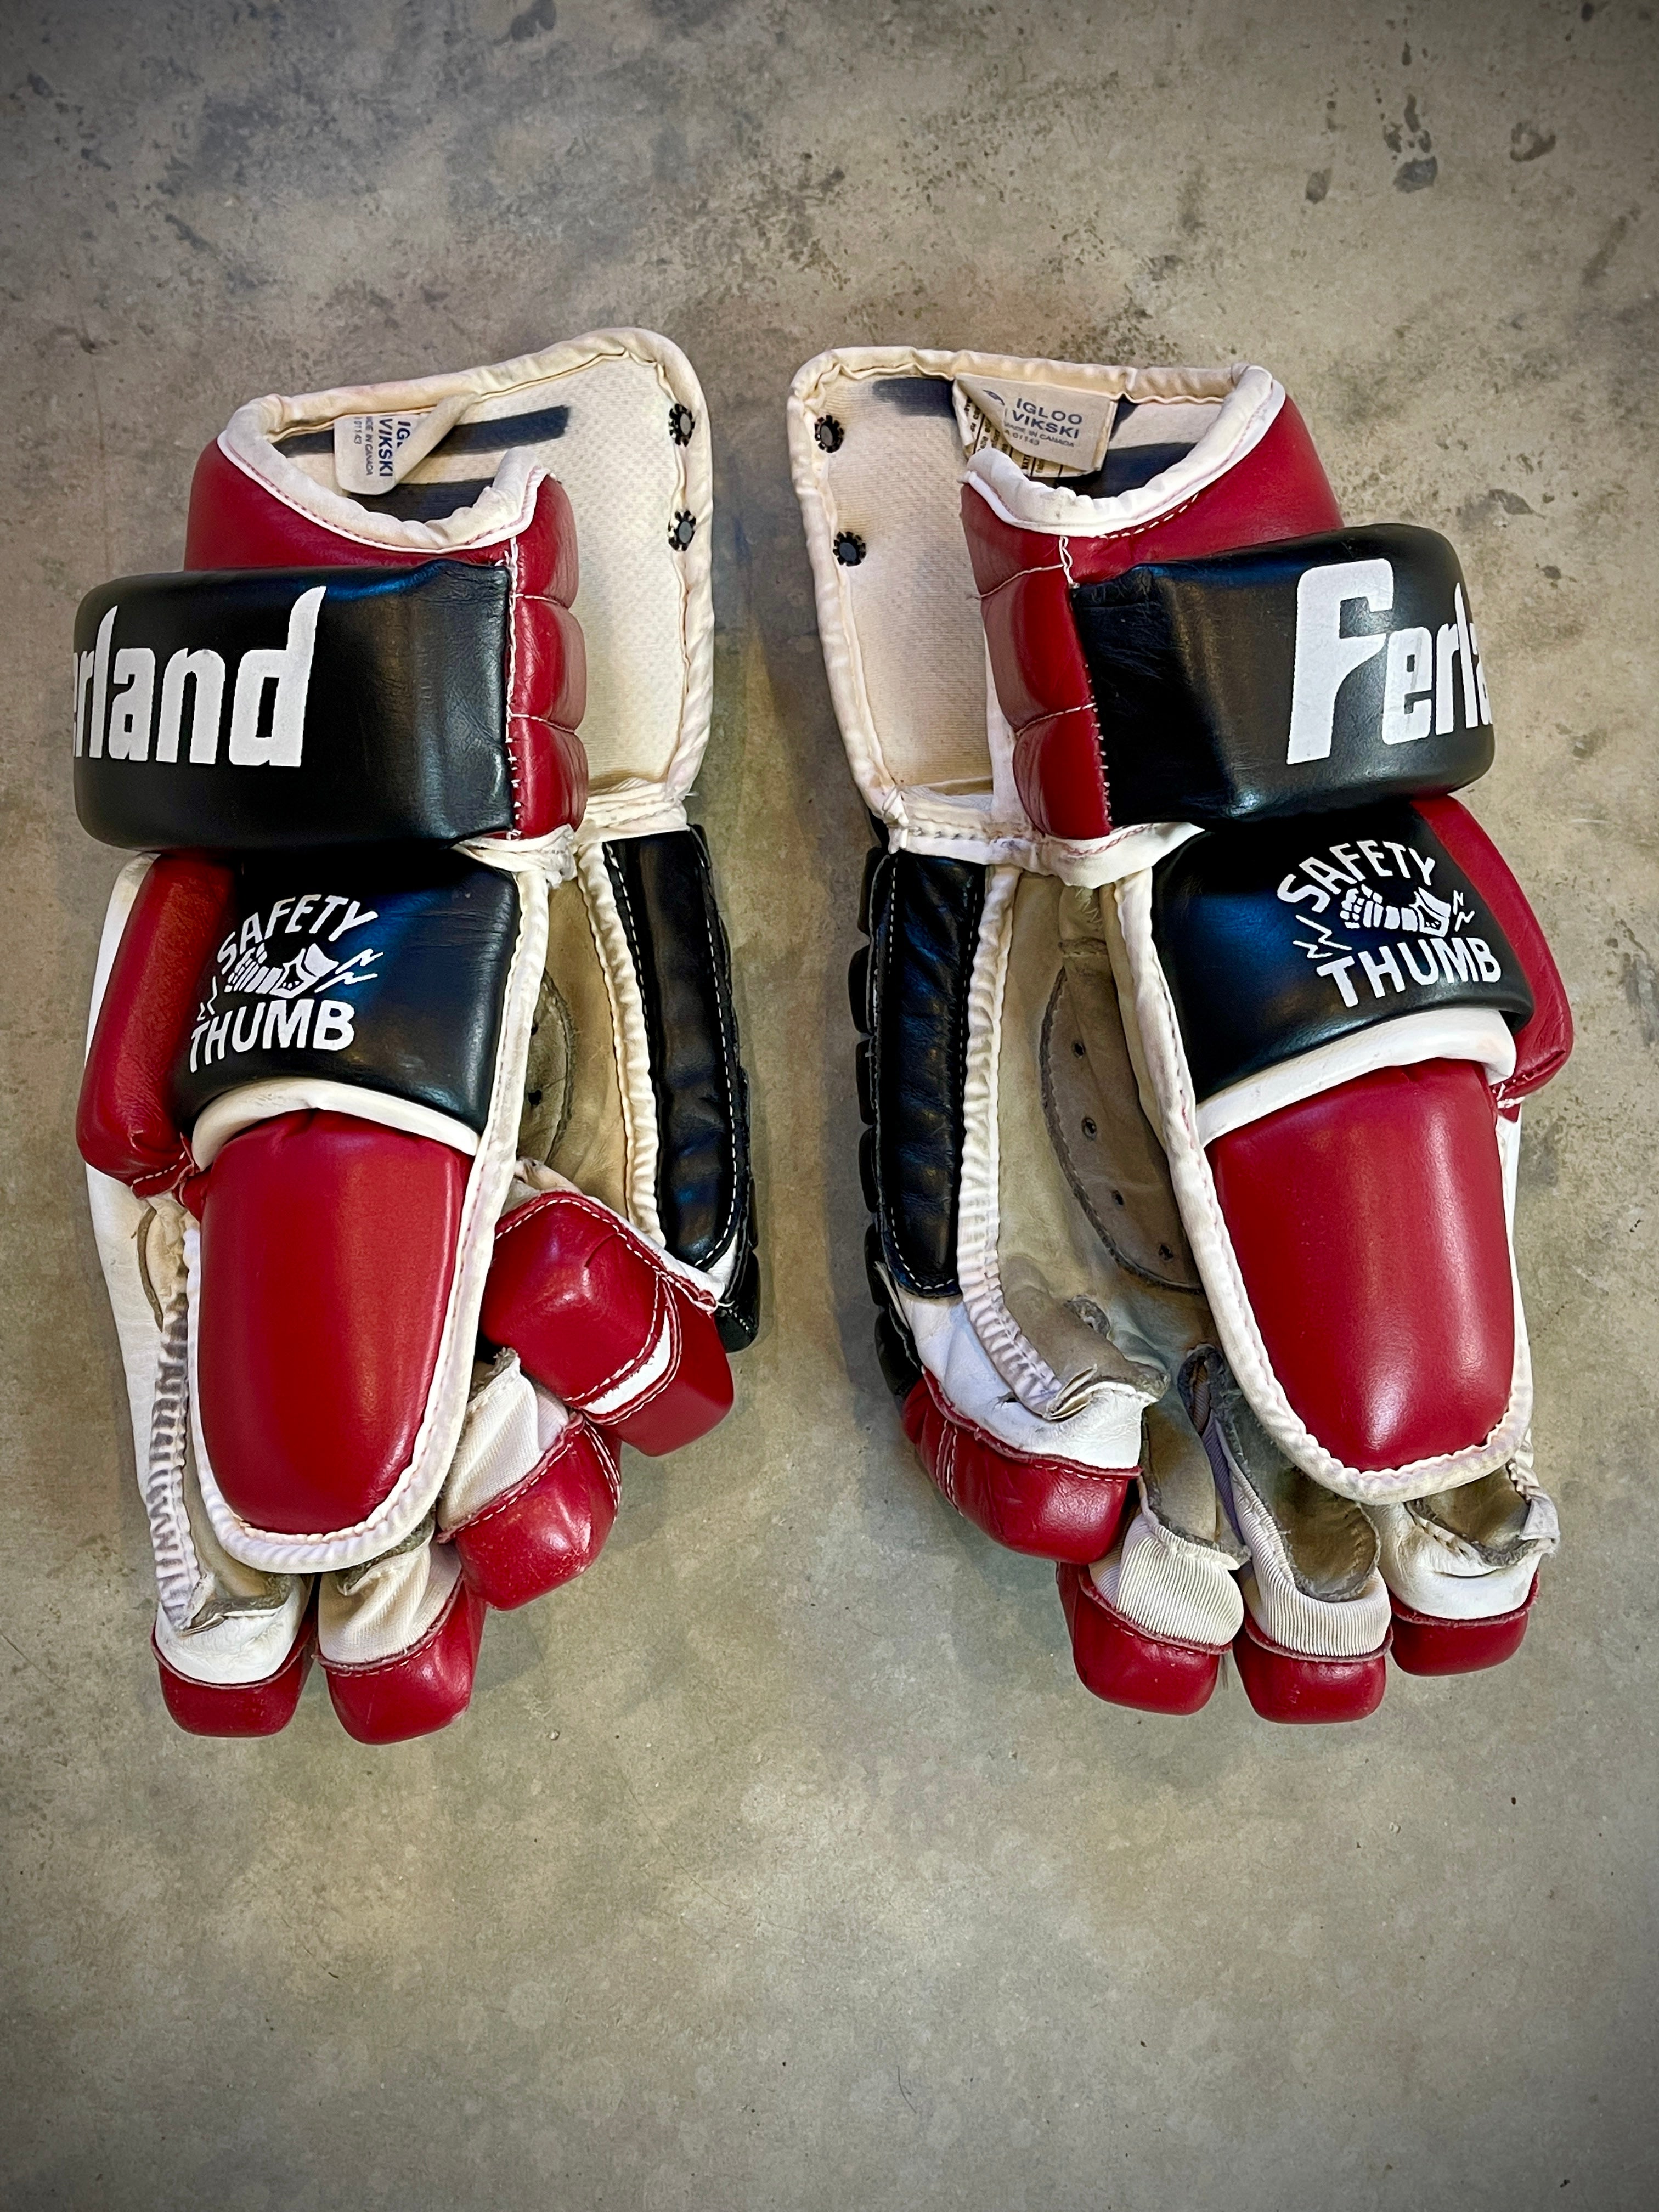 Ferland Hockey Gloves - Bed Bath & Beyond - 16789